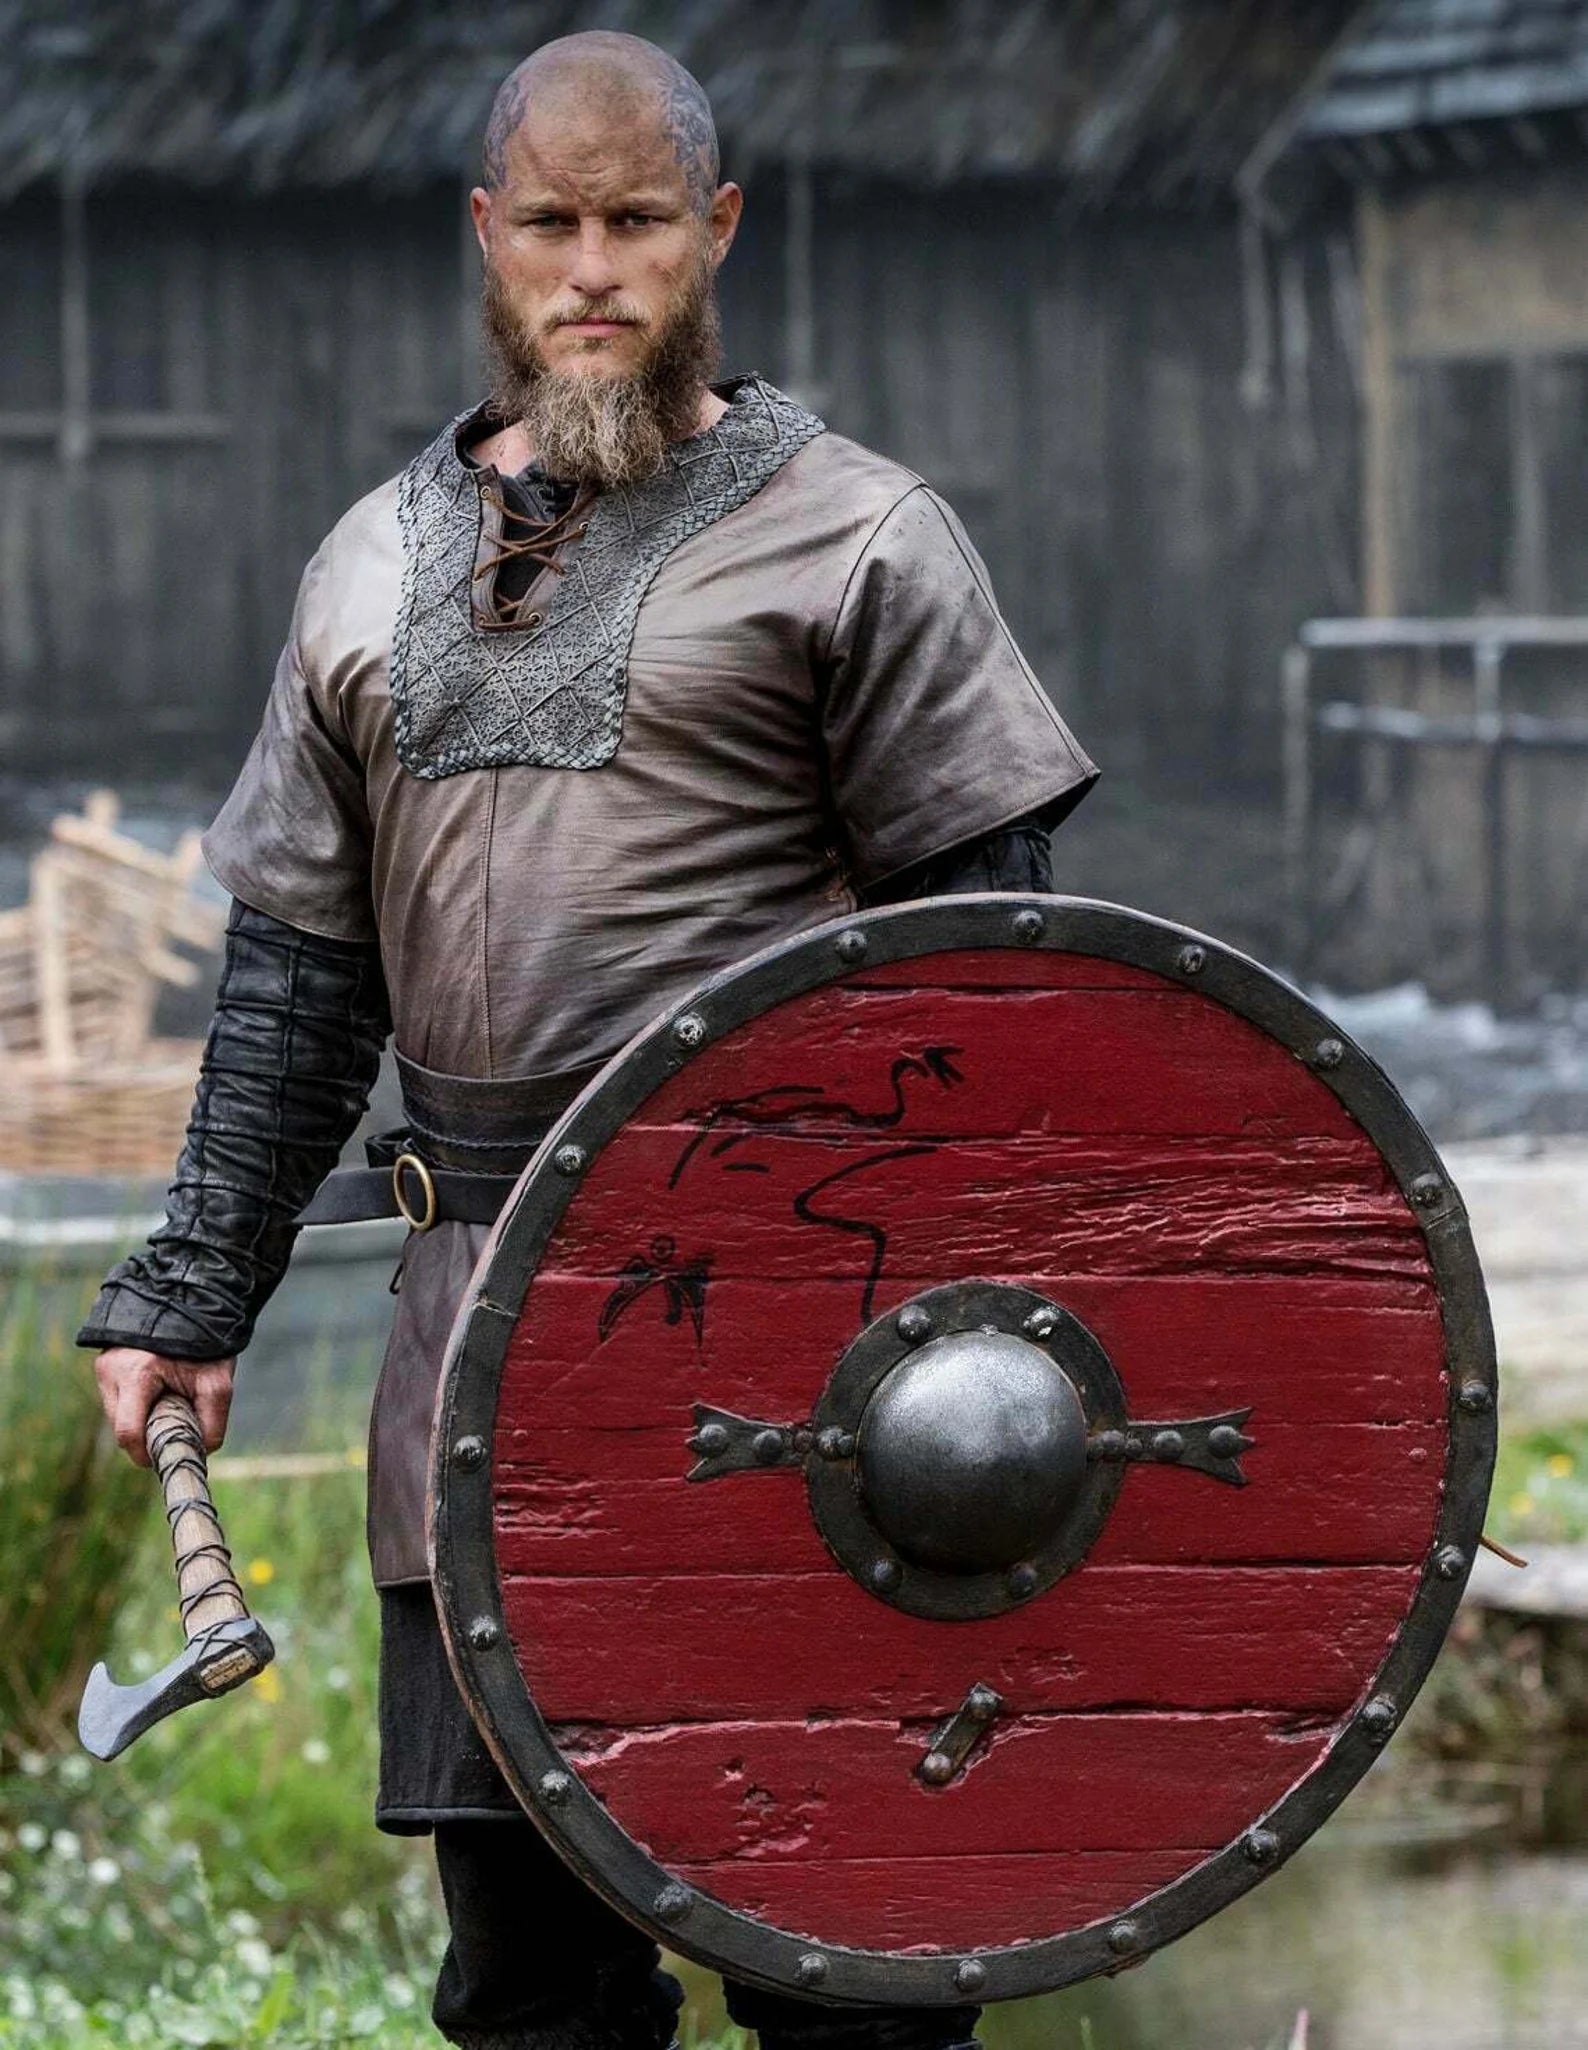 Plus Size Adult Vikings Ragnar Lothbrok Costume